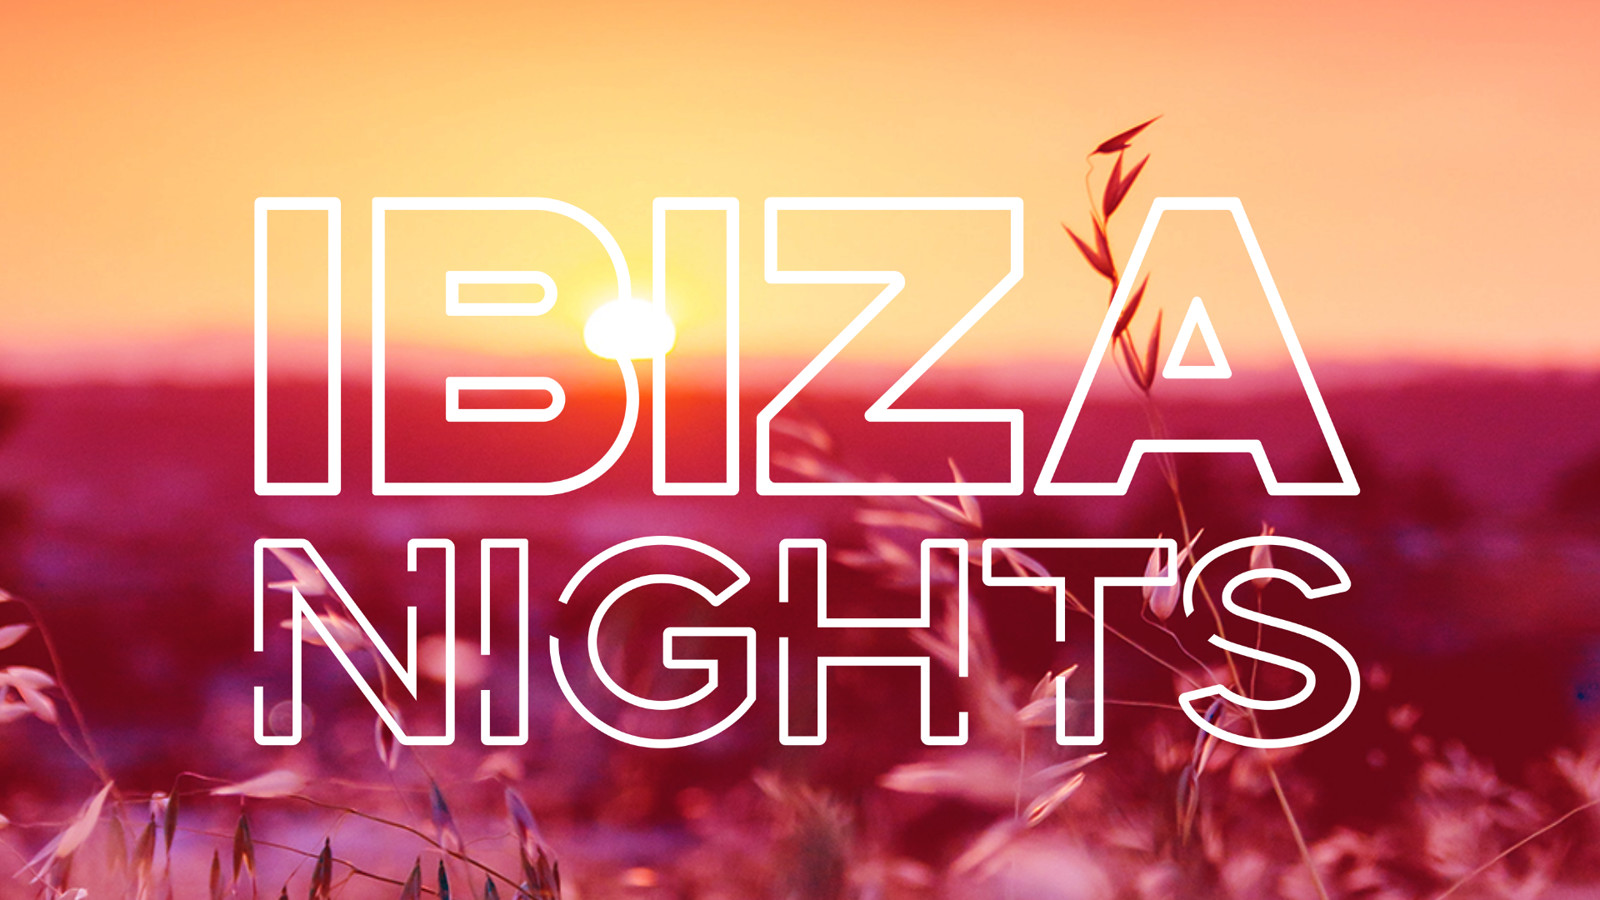 Ibiza Night Wallpapers